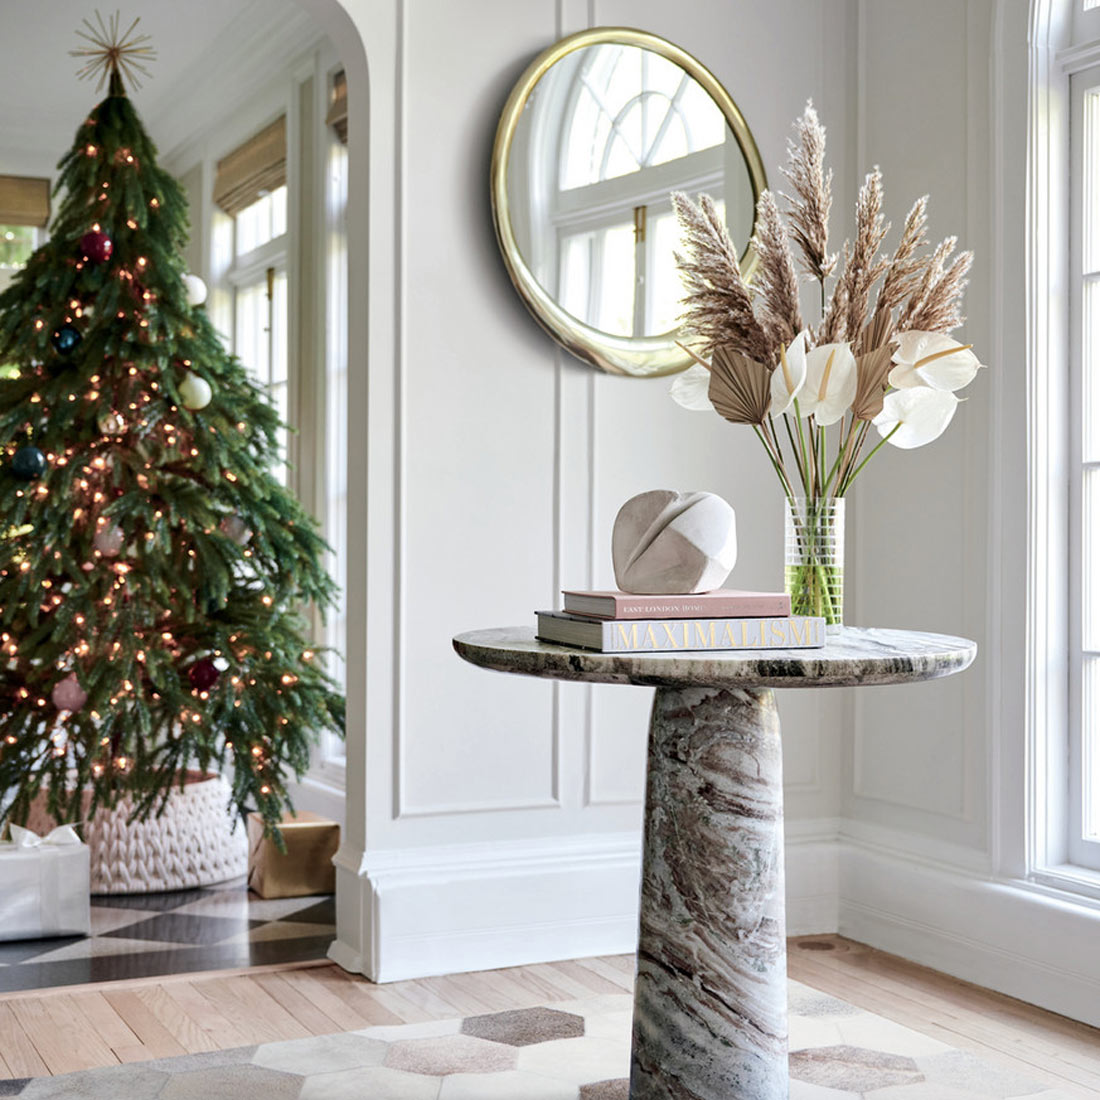 Best Christmas Tree Decorations